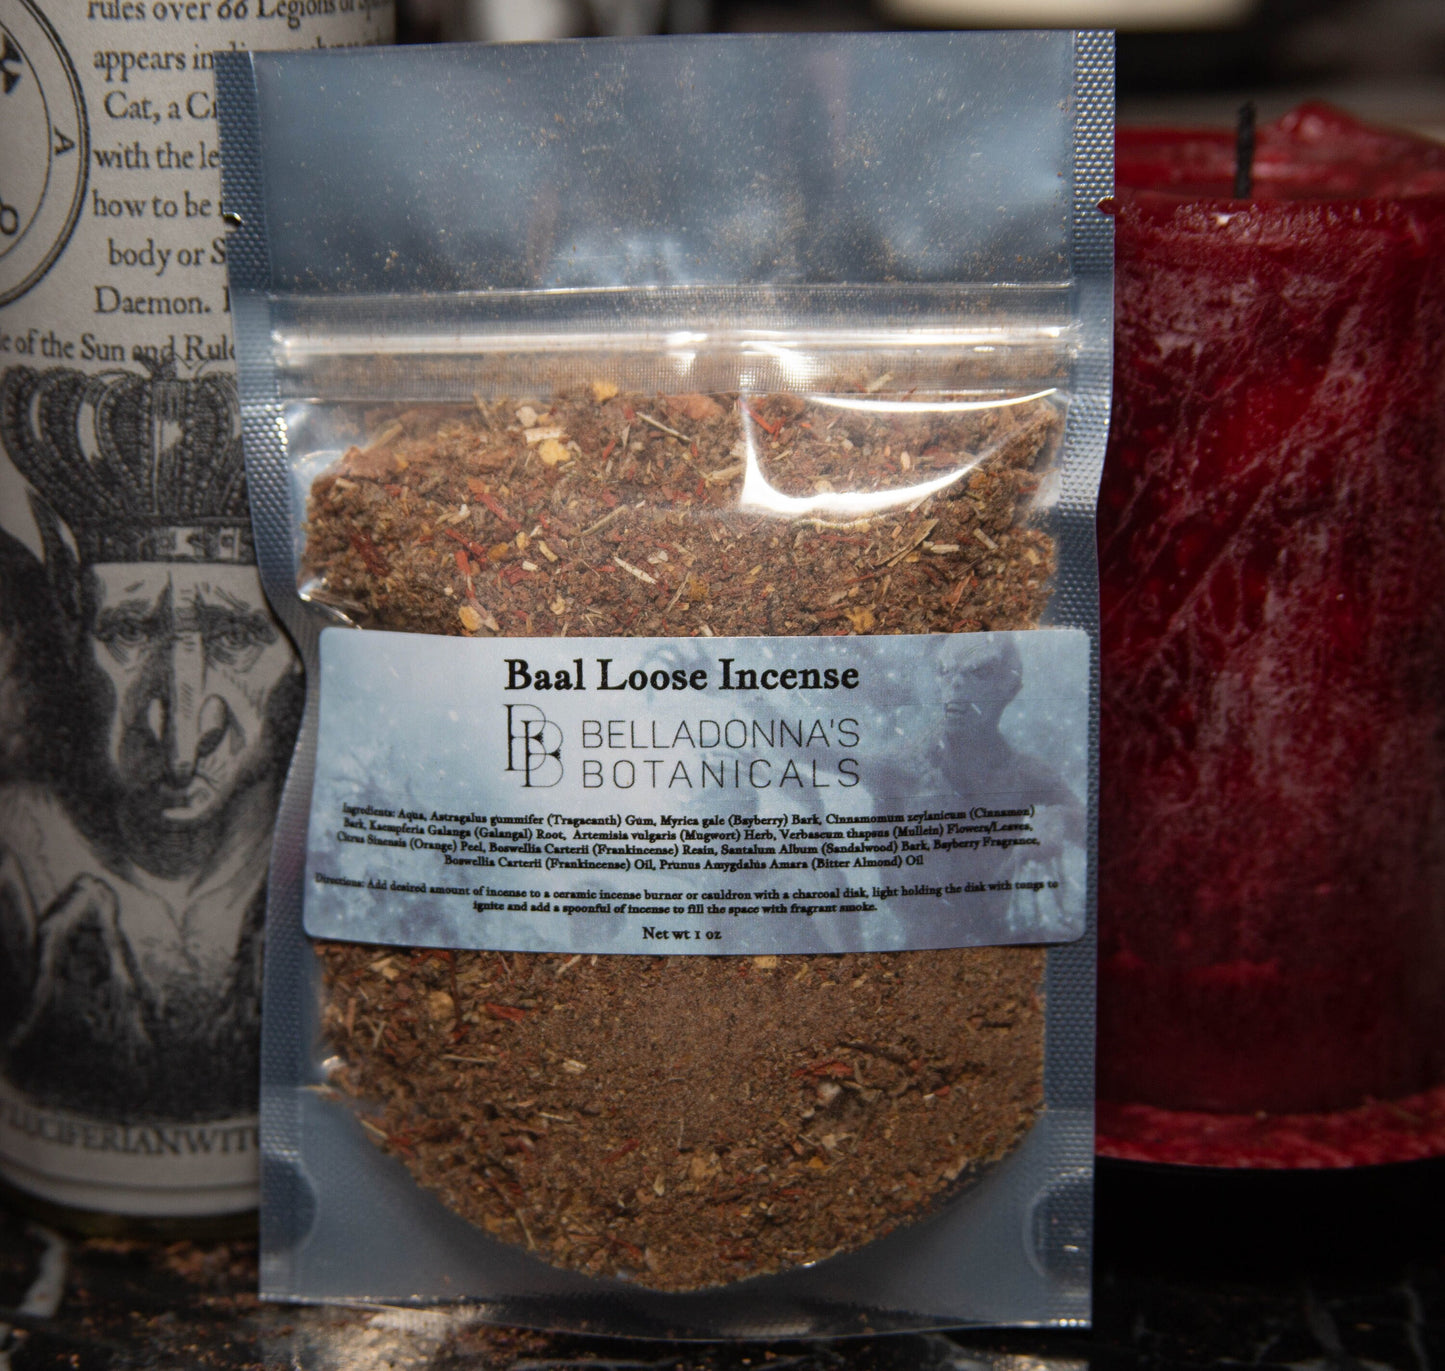 Baal Loose Incense